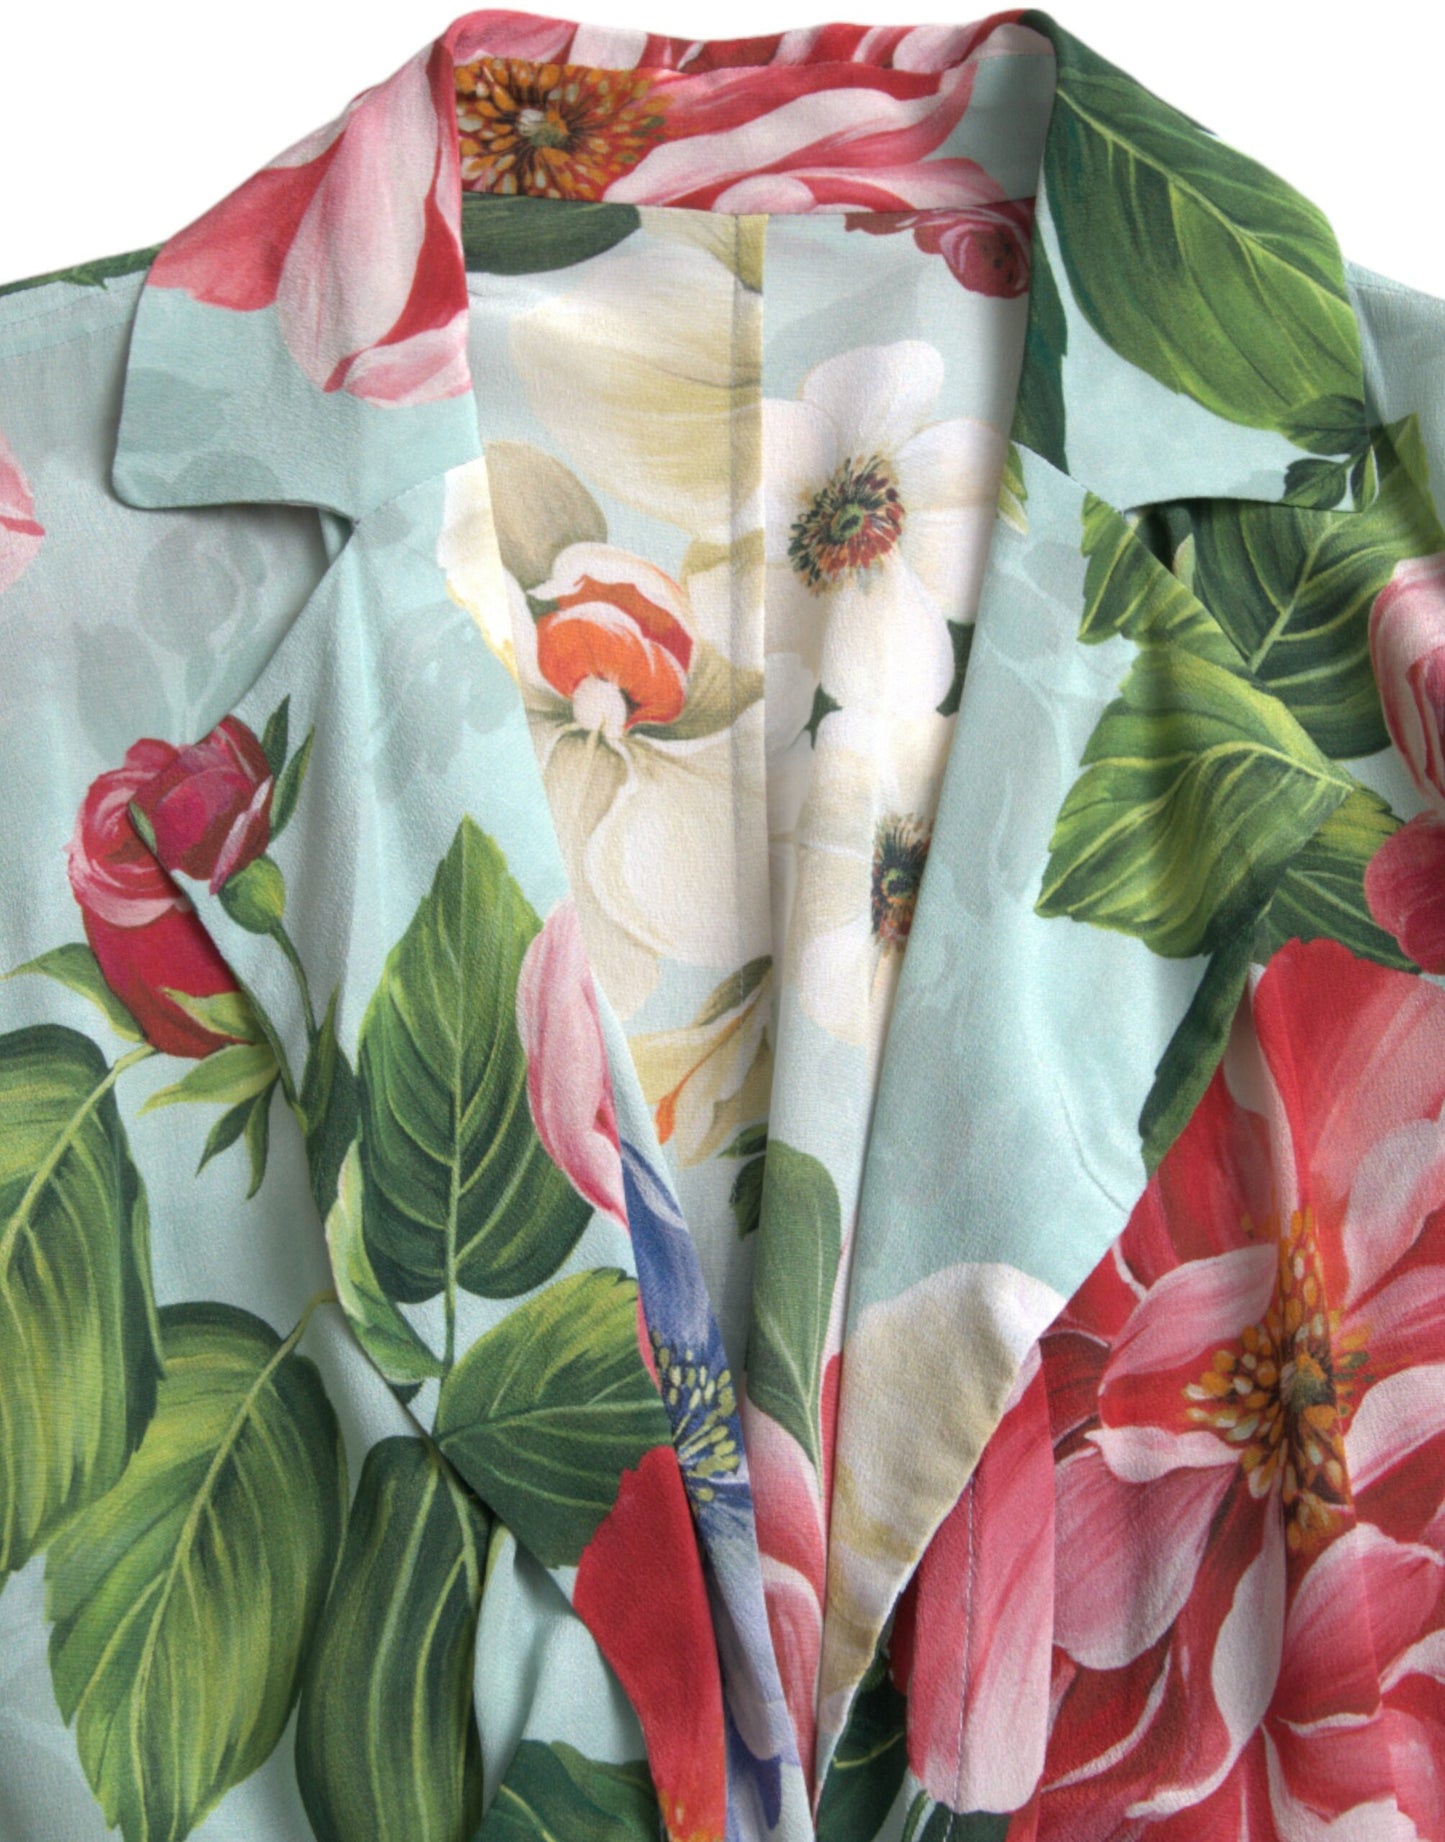 Elegant Floral Silk Crepe Jumpsuit